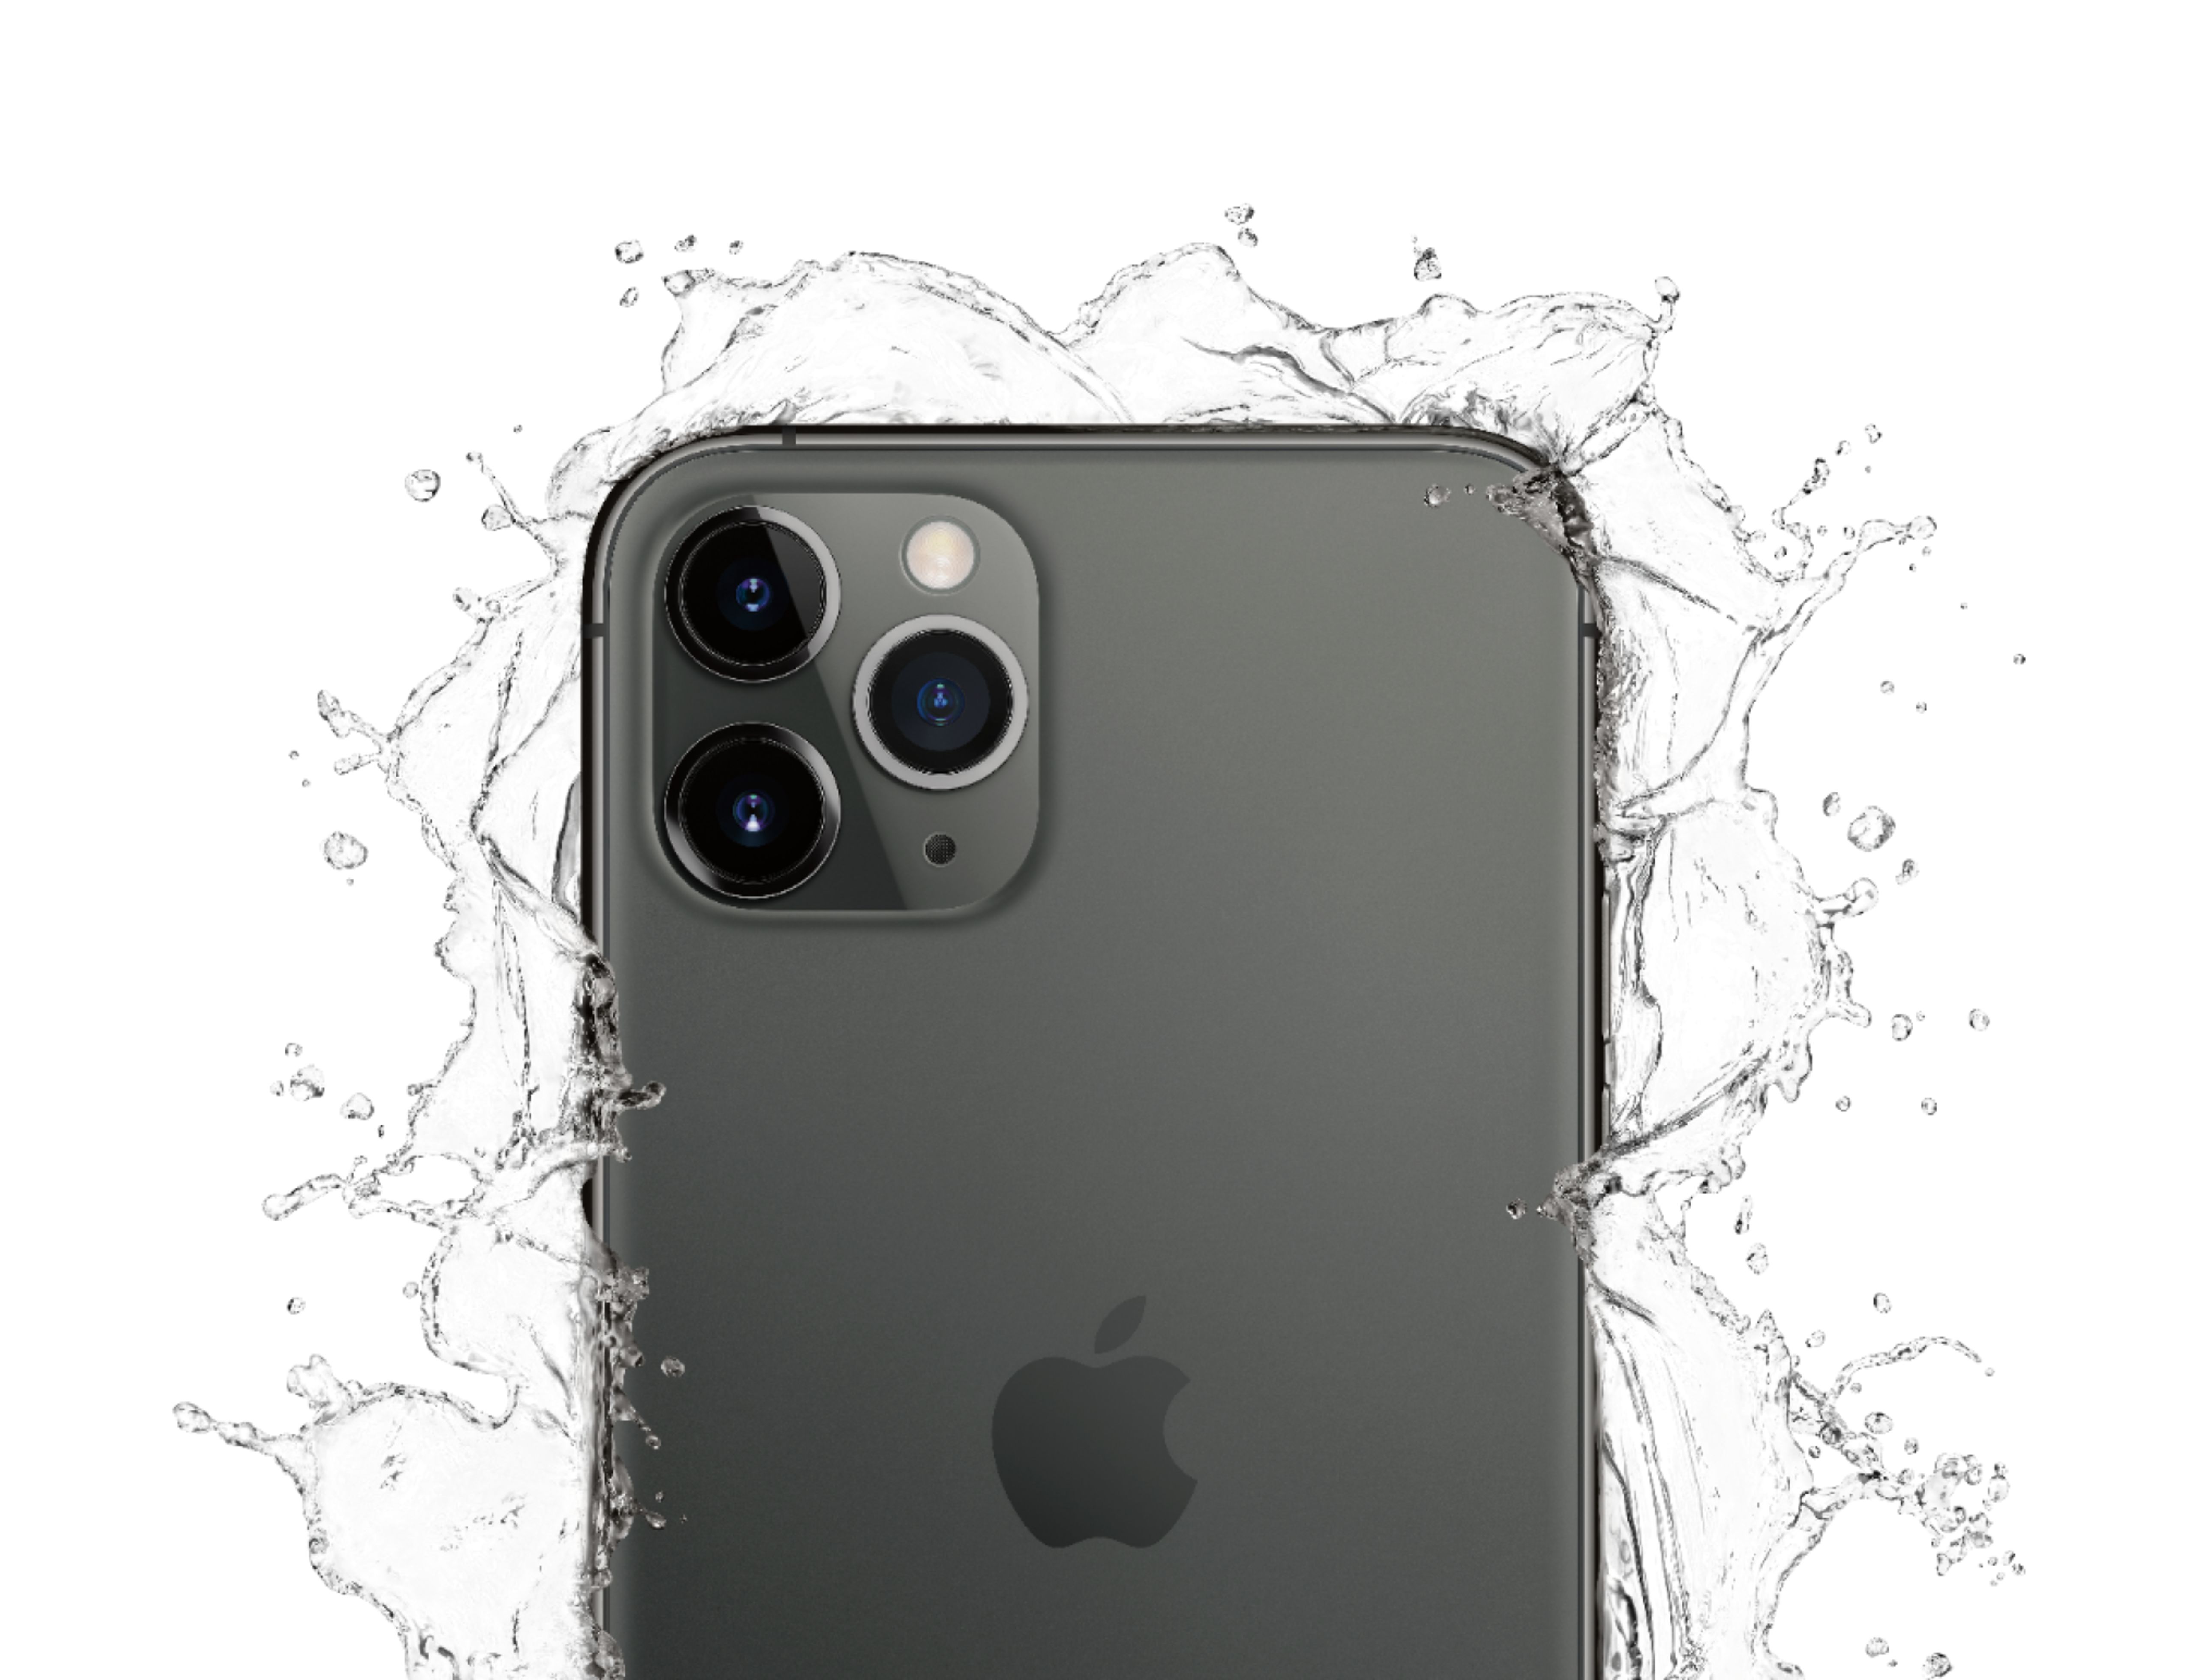 Best Buy: Apple iPhone 11 Pro 256GB Space Gray (Verizon) MWCM2LL/A